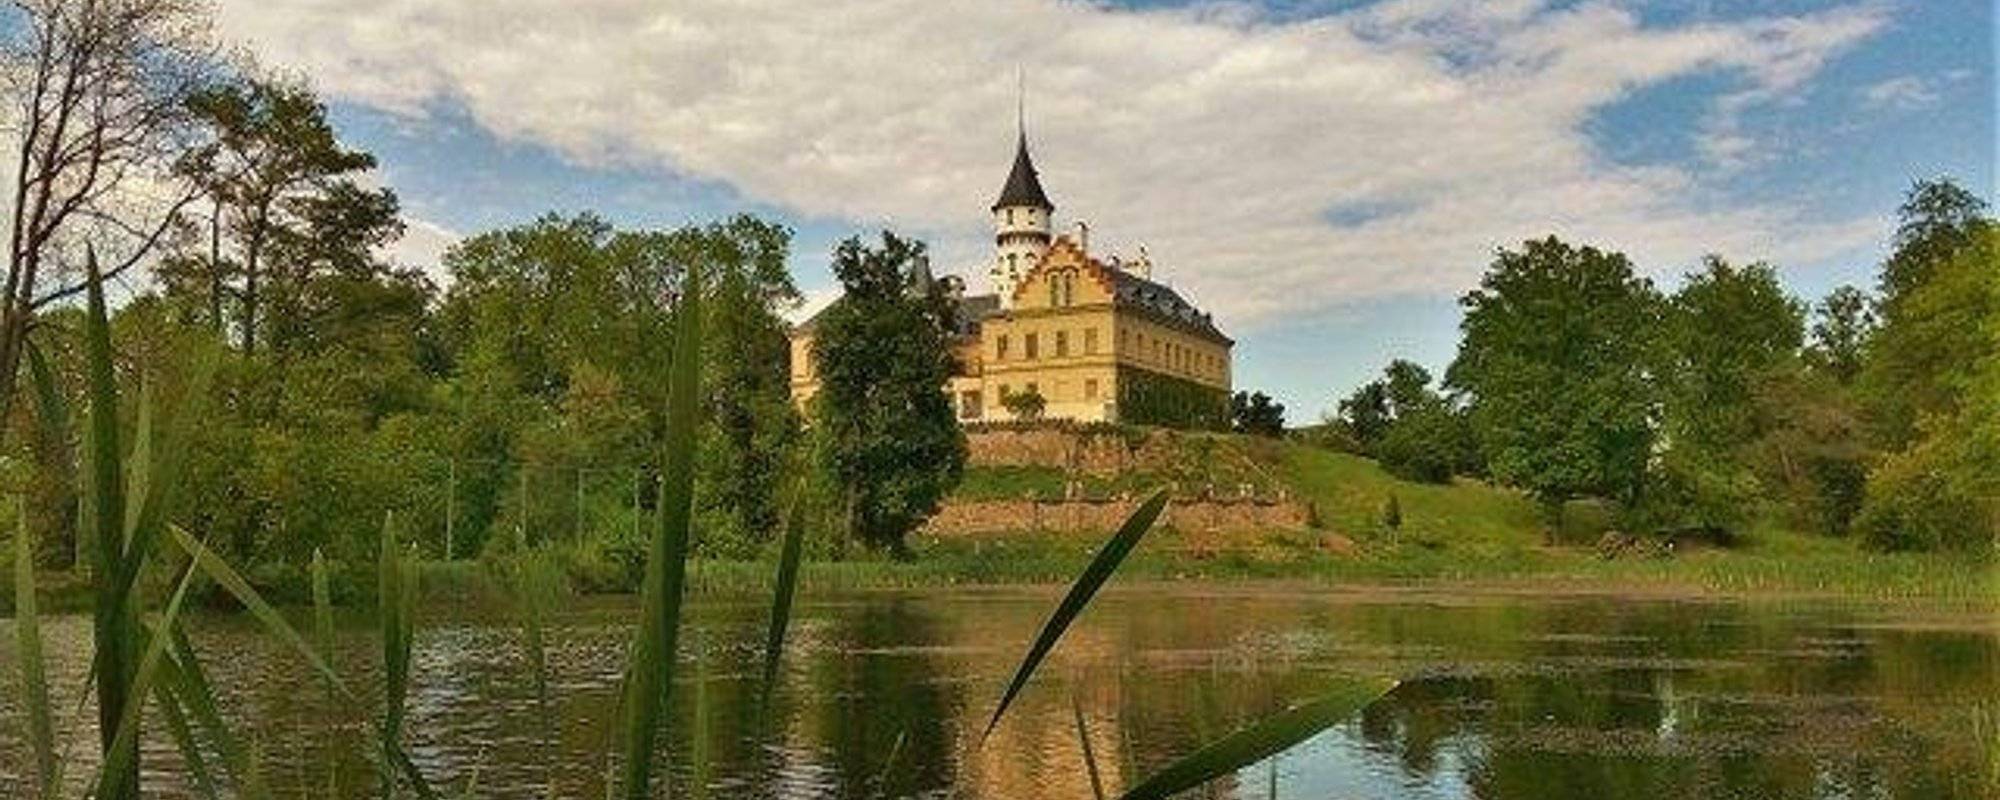 Beauties of Czech Republic: charming chateau of Radun